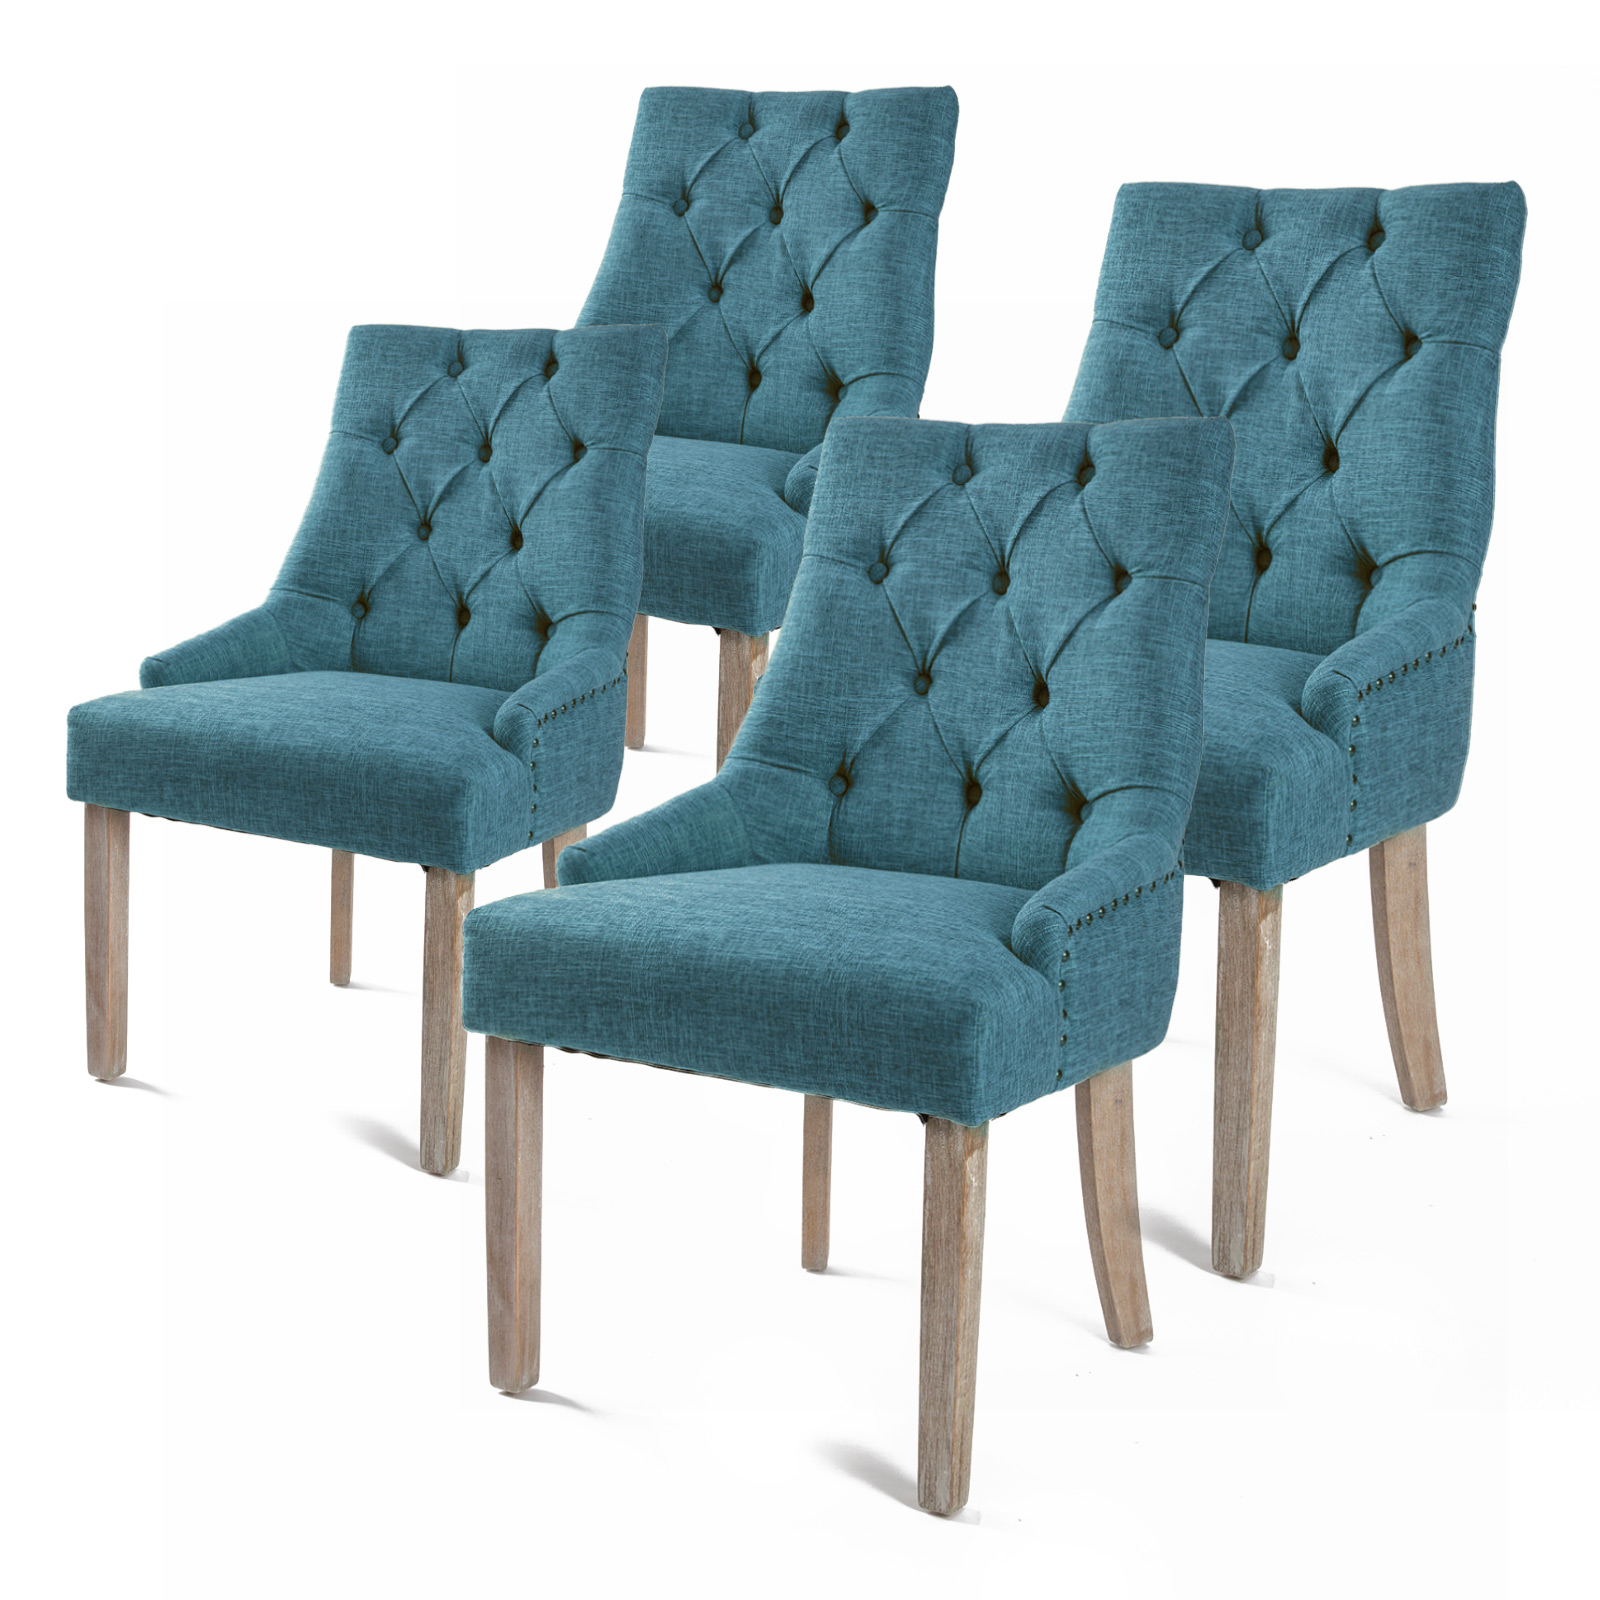 4X French Provincial Oak Leg Chair AMOUR - DARK BLUE